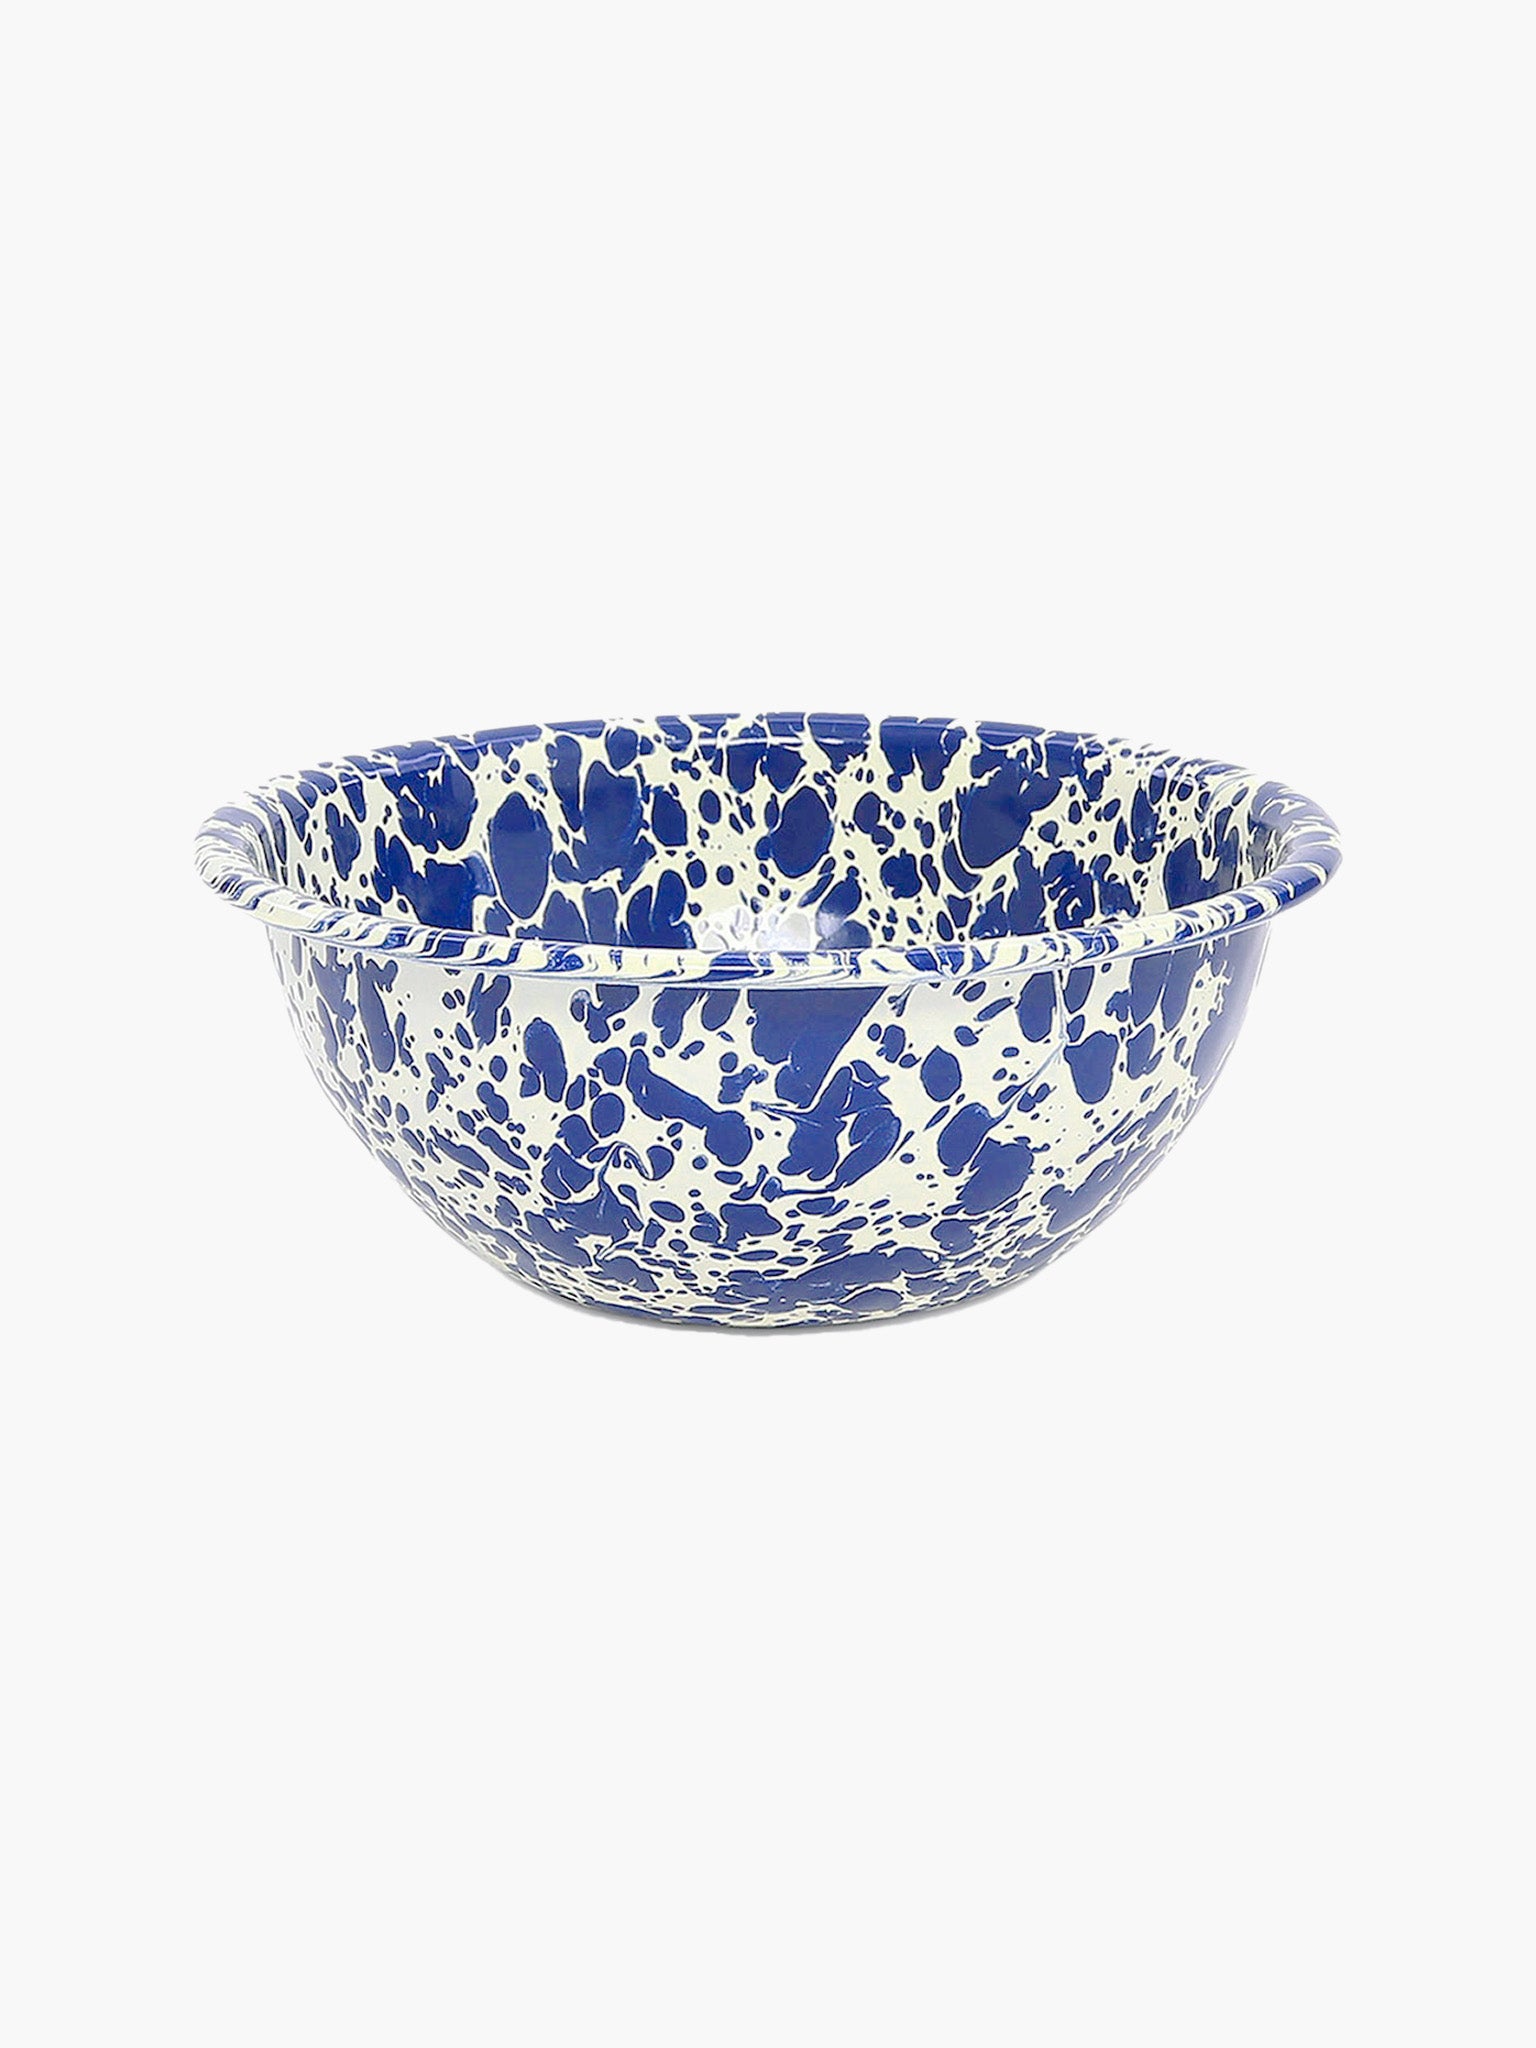 Splatter Cereal Bowl (16cm) - Navy and Cream